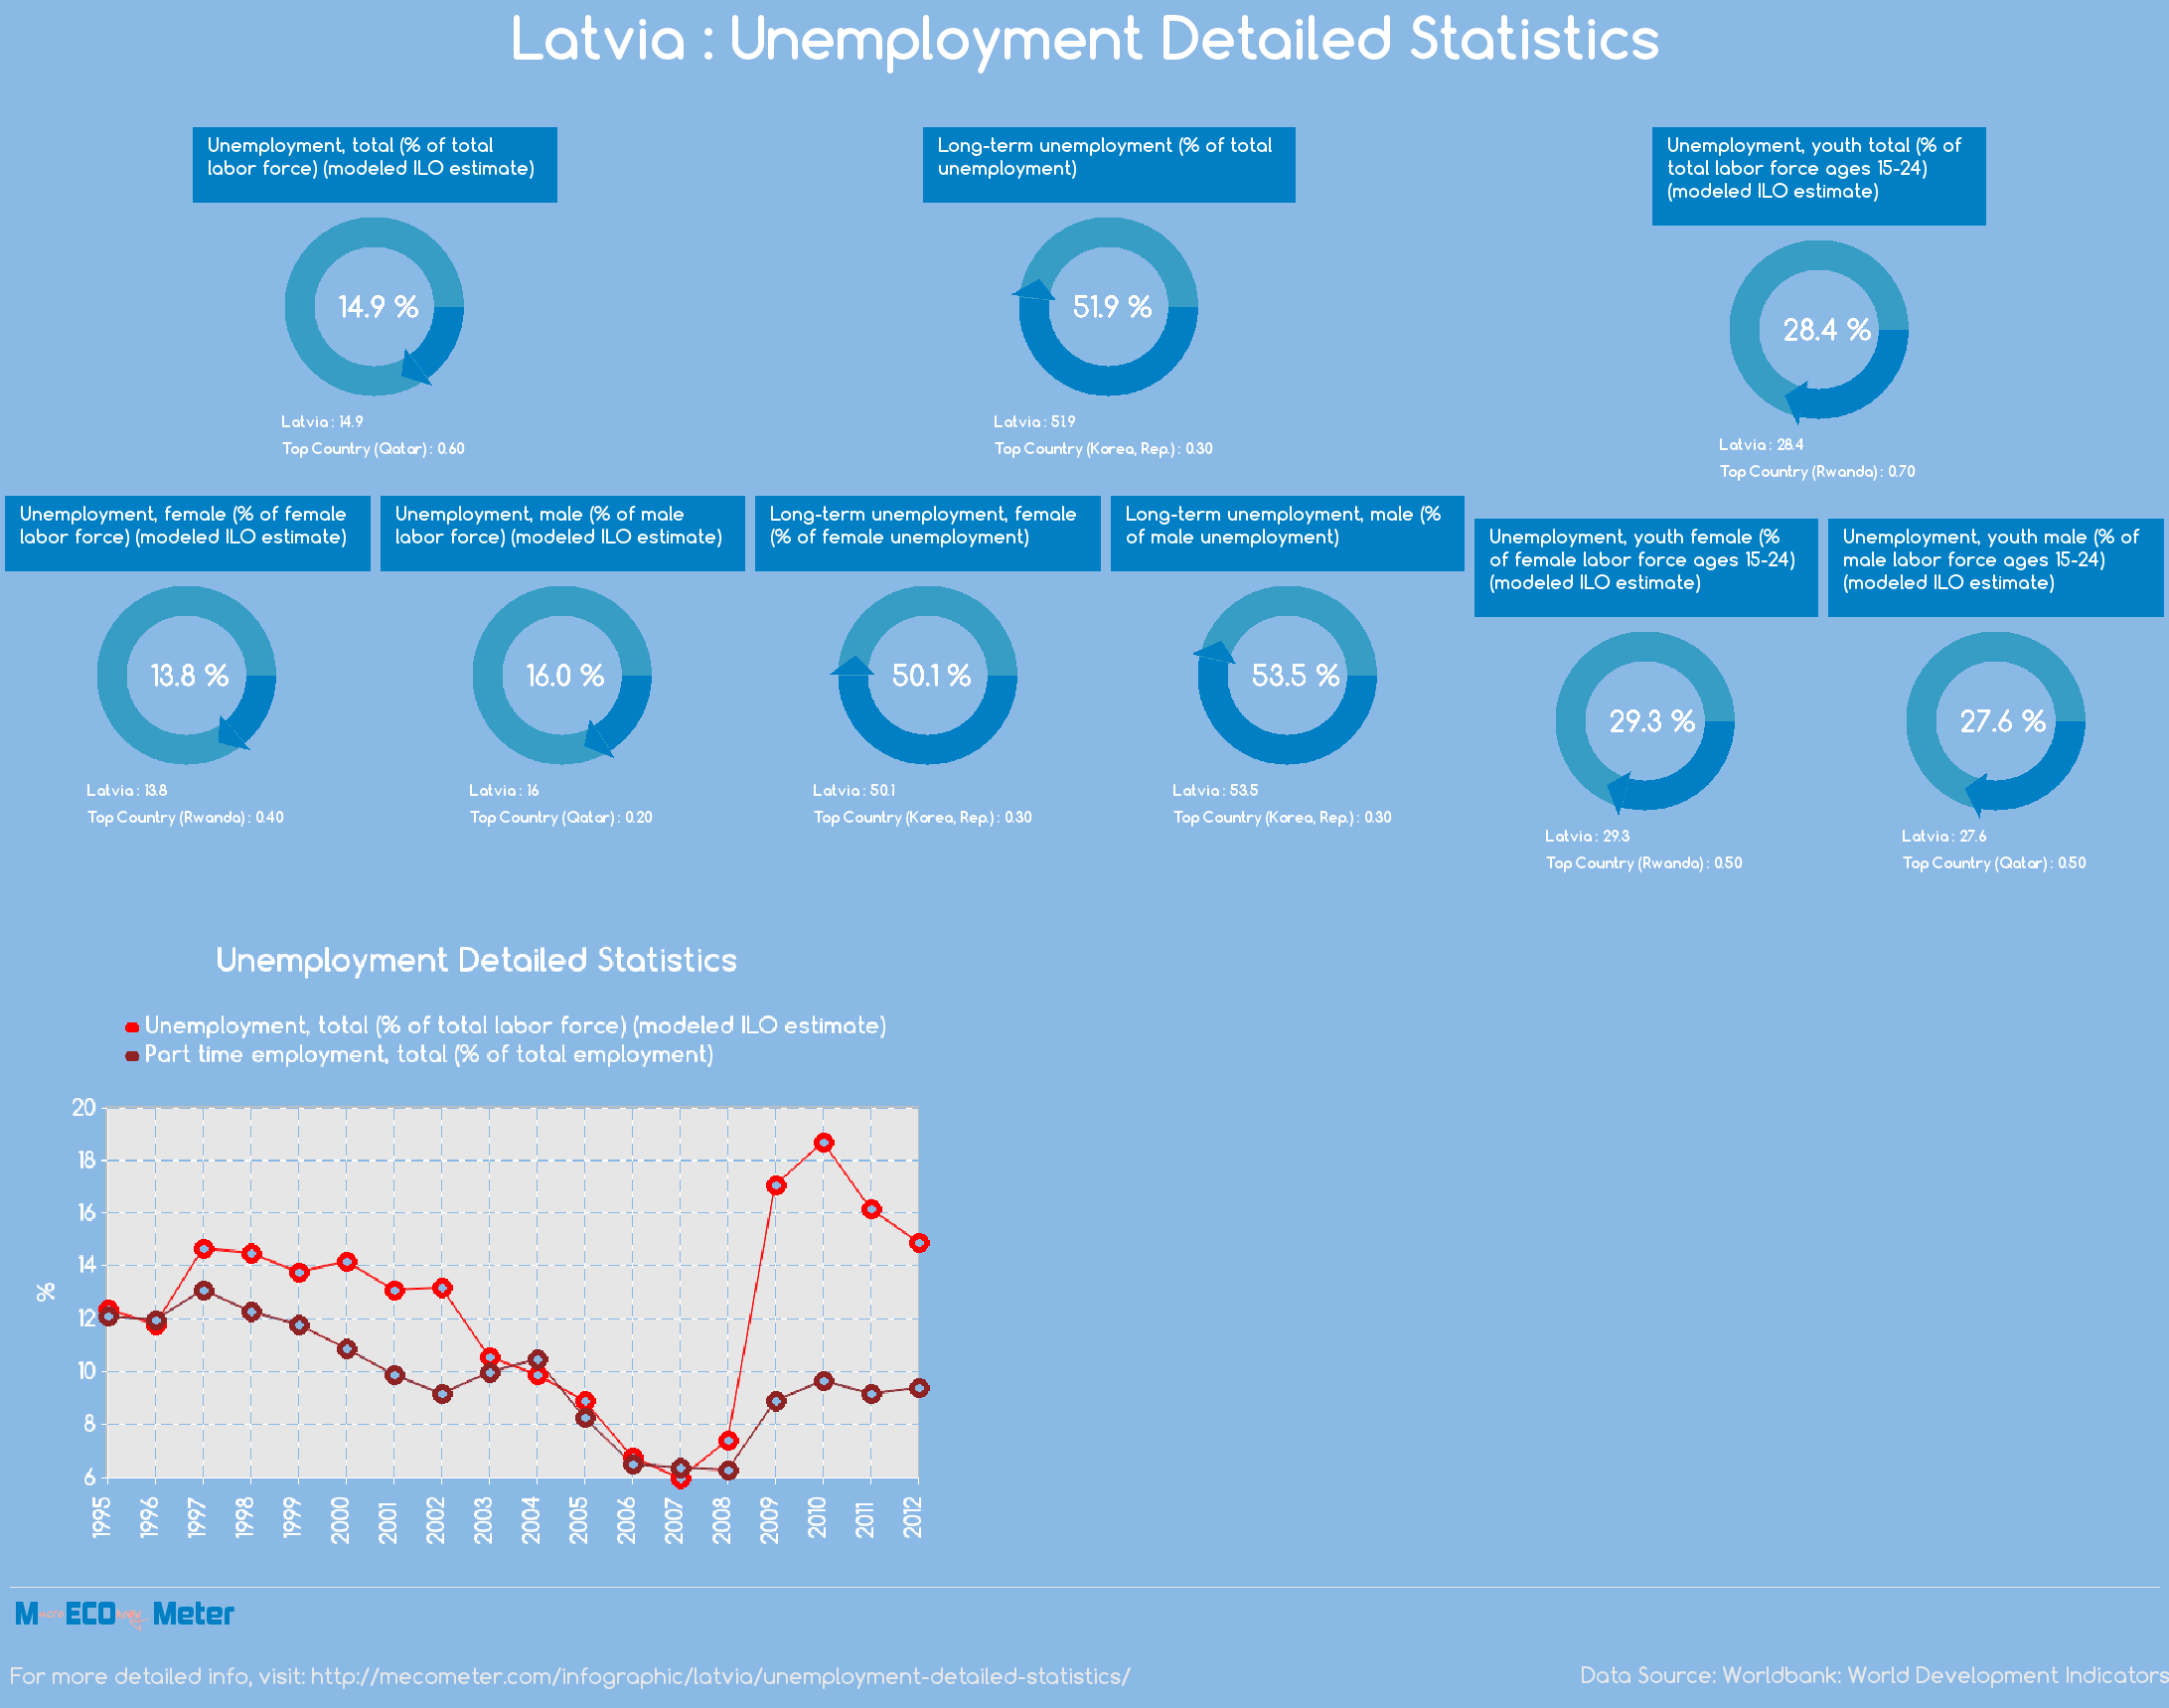 Latvia : Unemployment Detailed Statistics